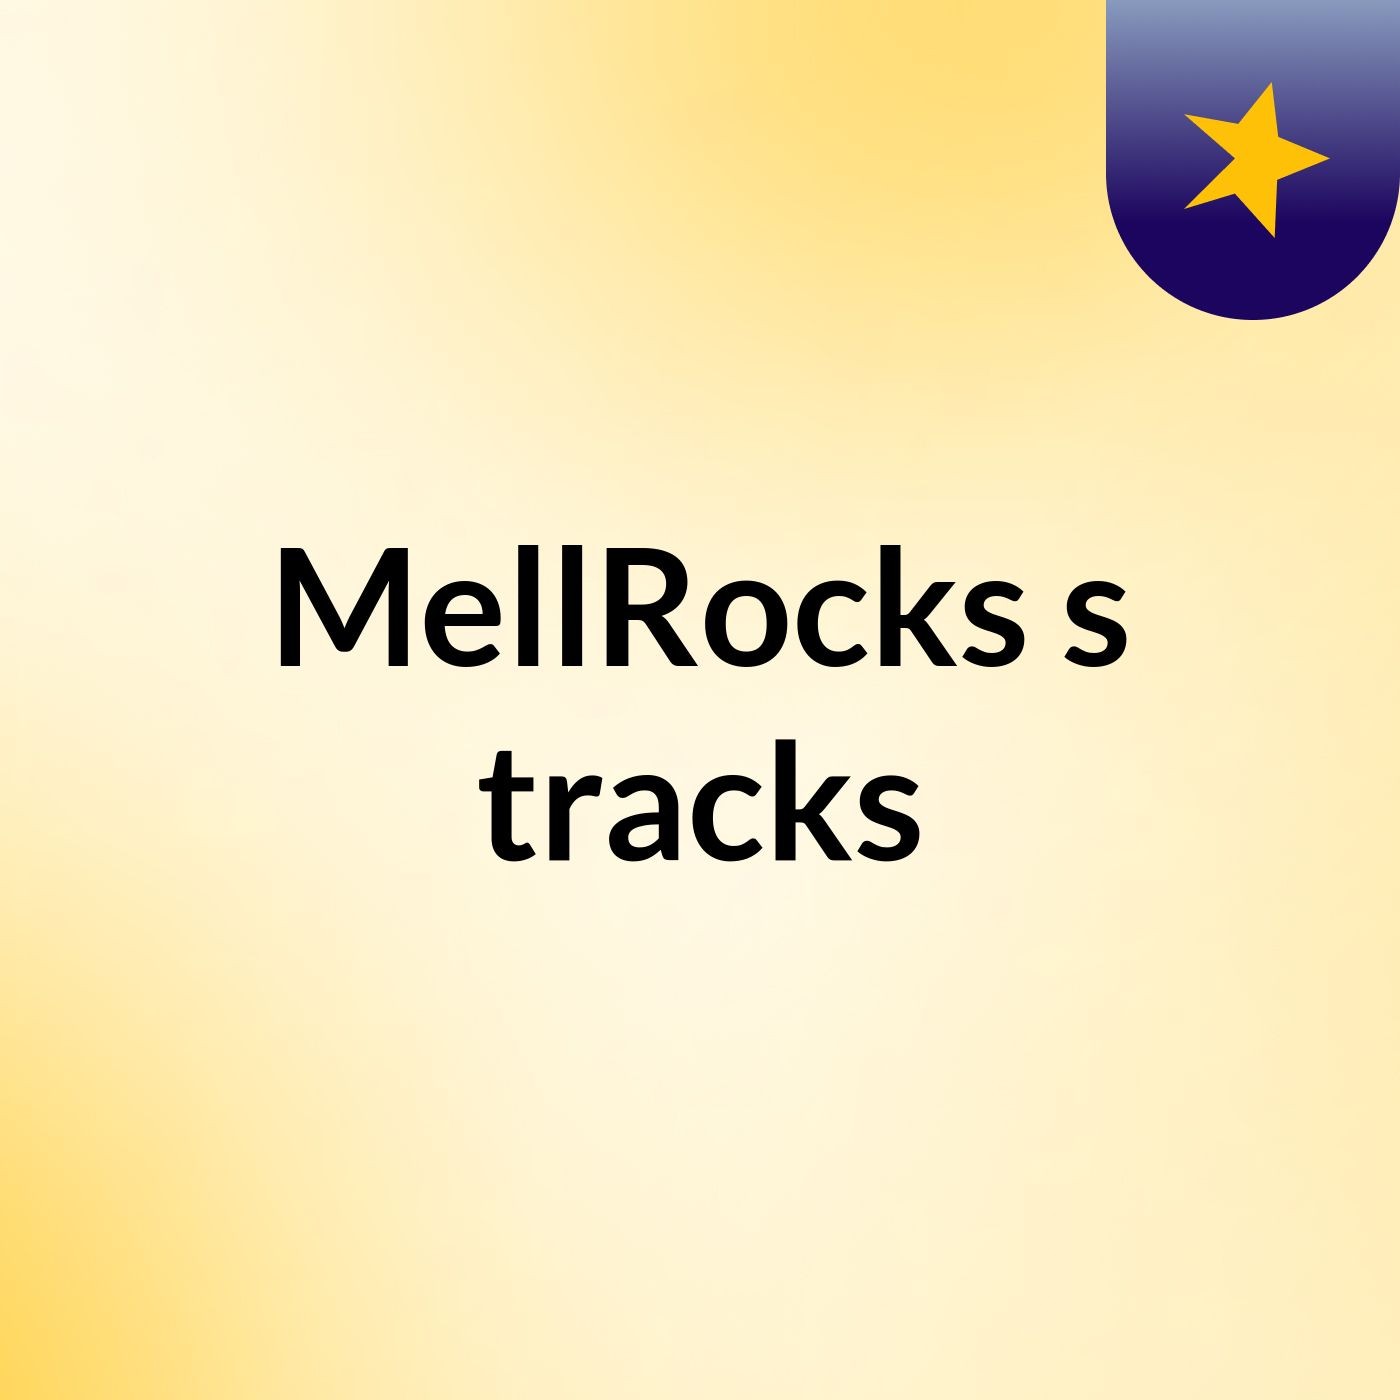 MellRocks's tracks